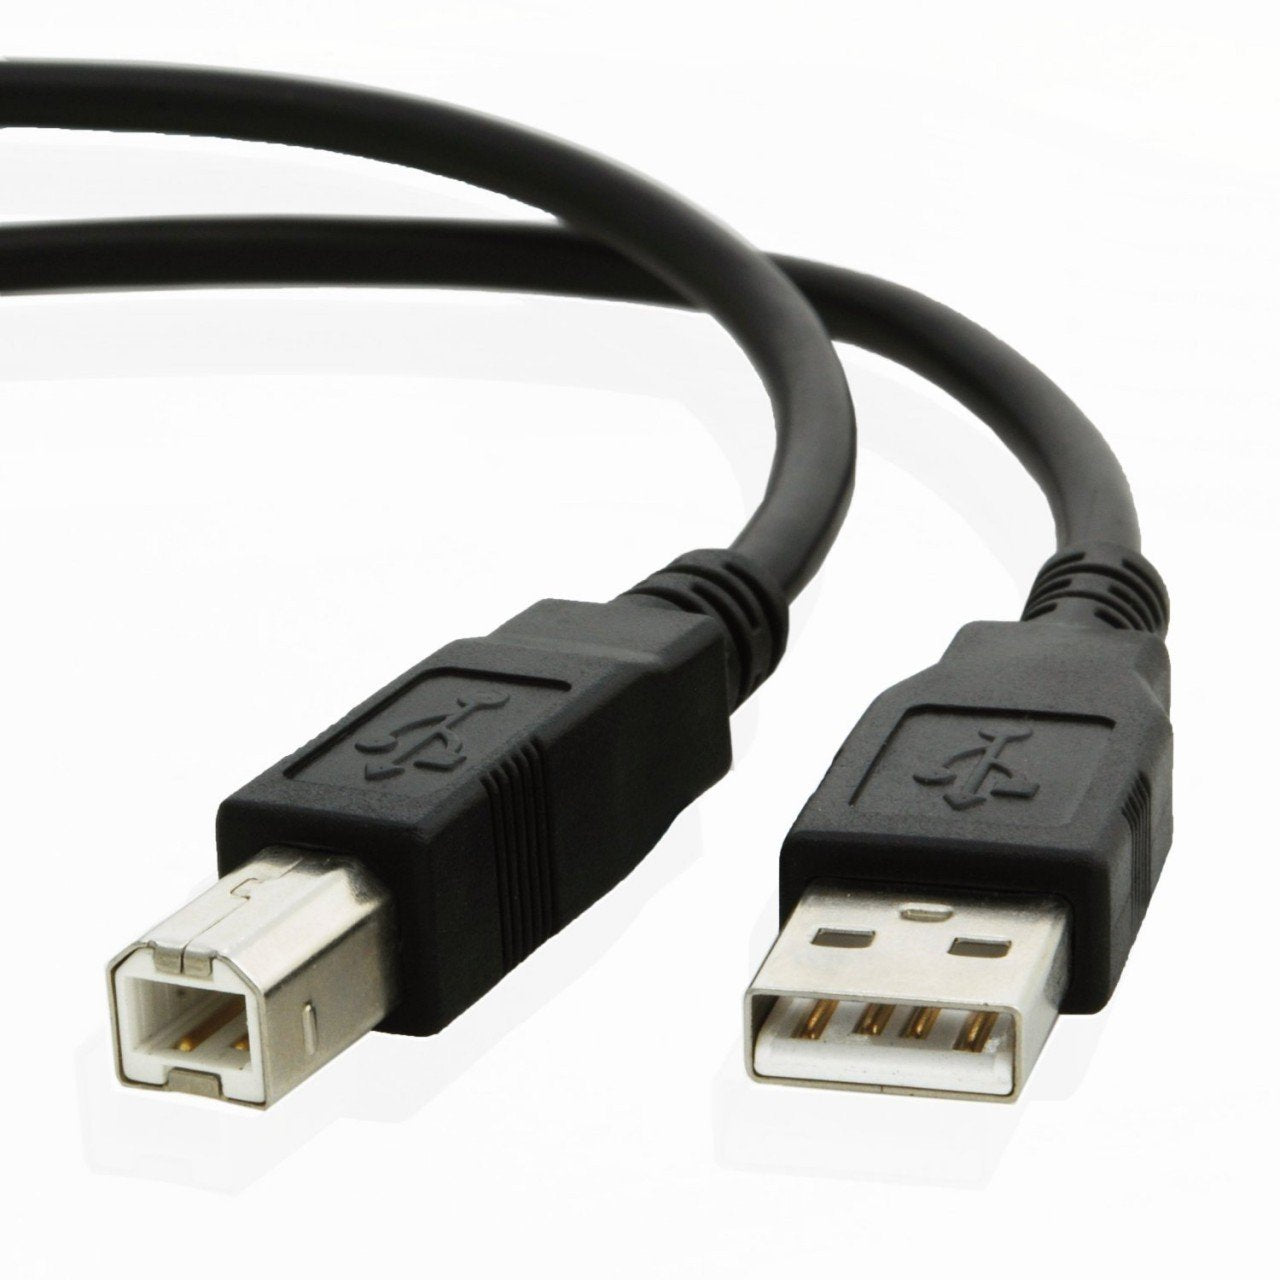 USB cable for Canon PIXMA MP230